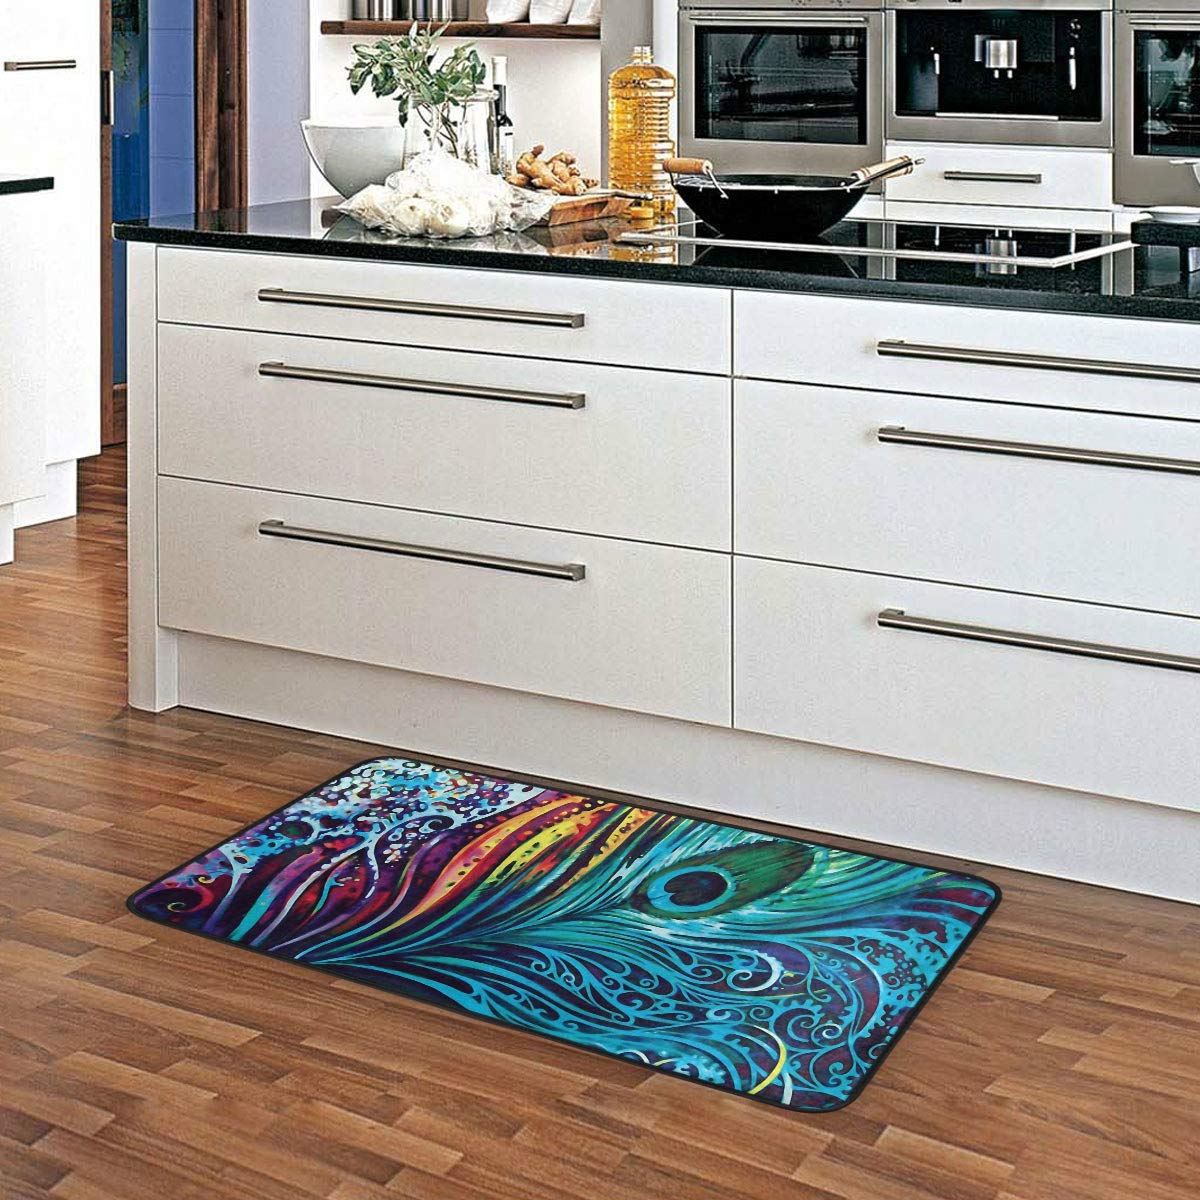 Kitchen Rugs Vibrant Peacock Feather Design Non-Slip Soft Kitchen Mats Bath Rug Runner Doormats Carpet for Home Decor, 39" X 20"